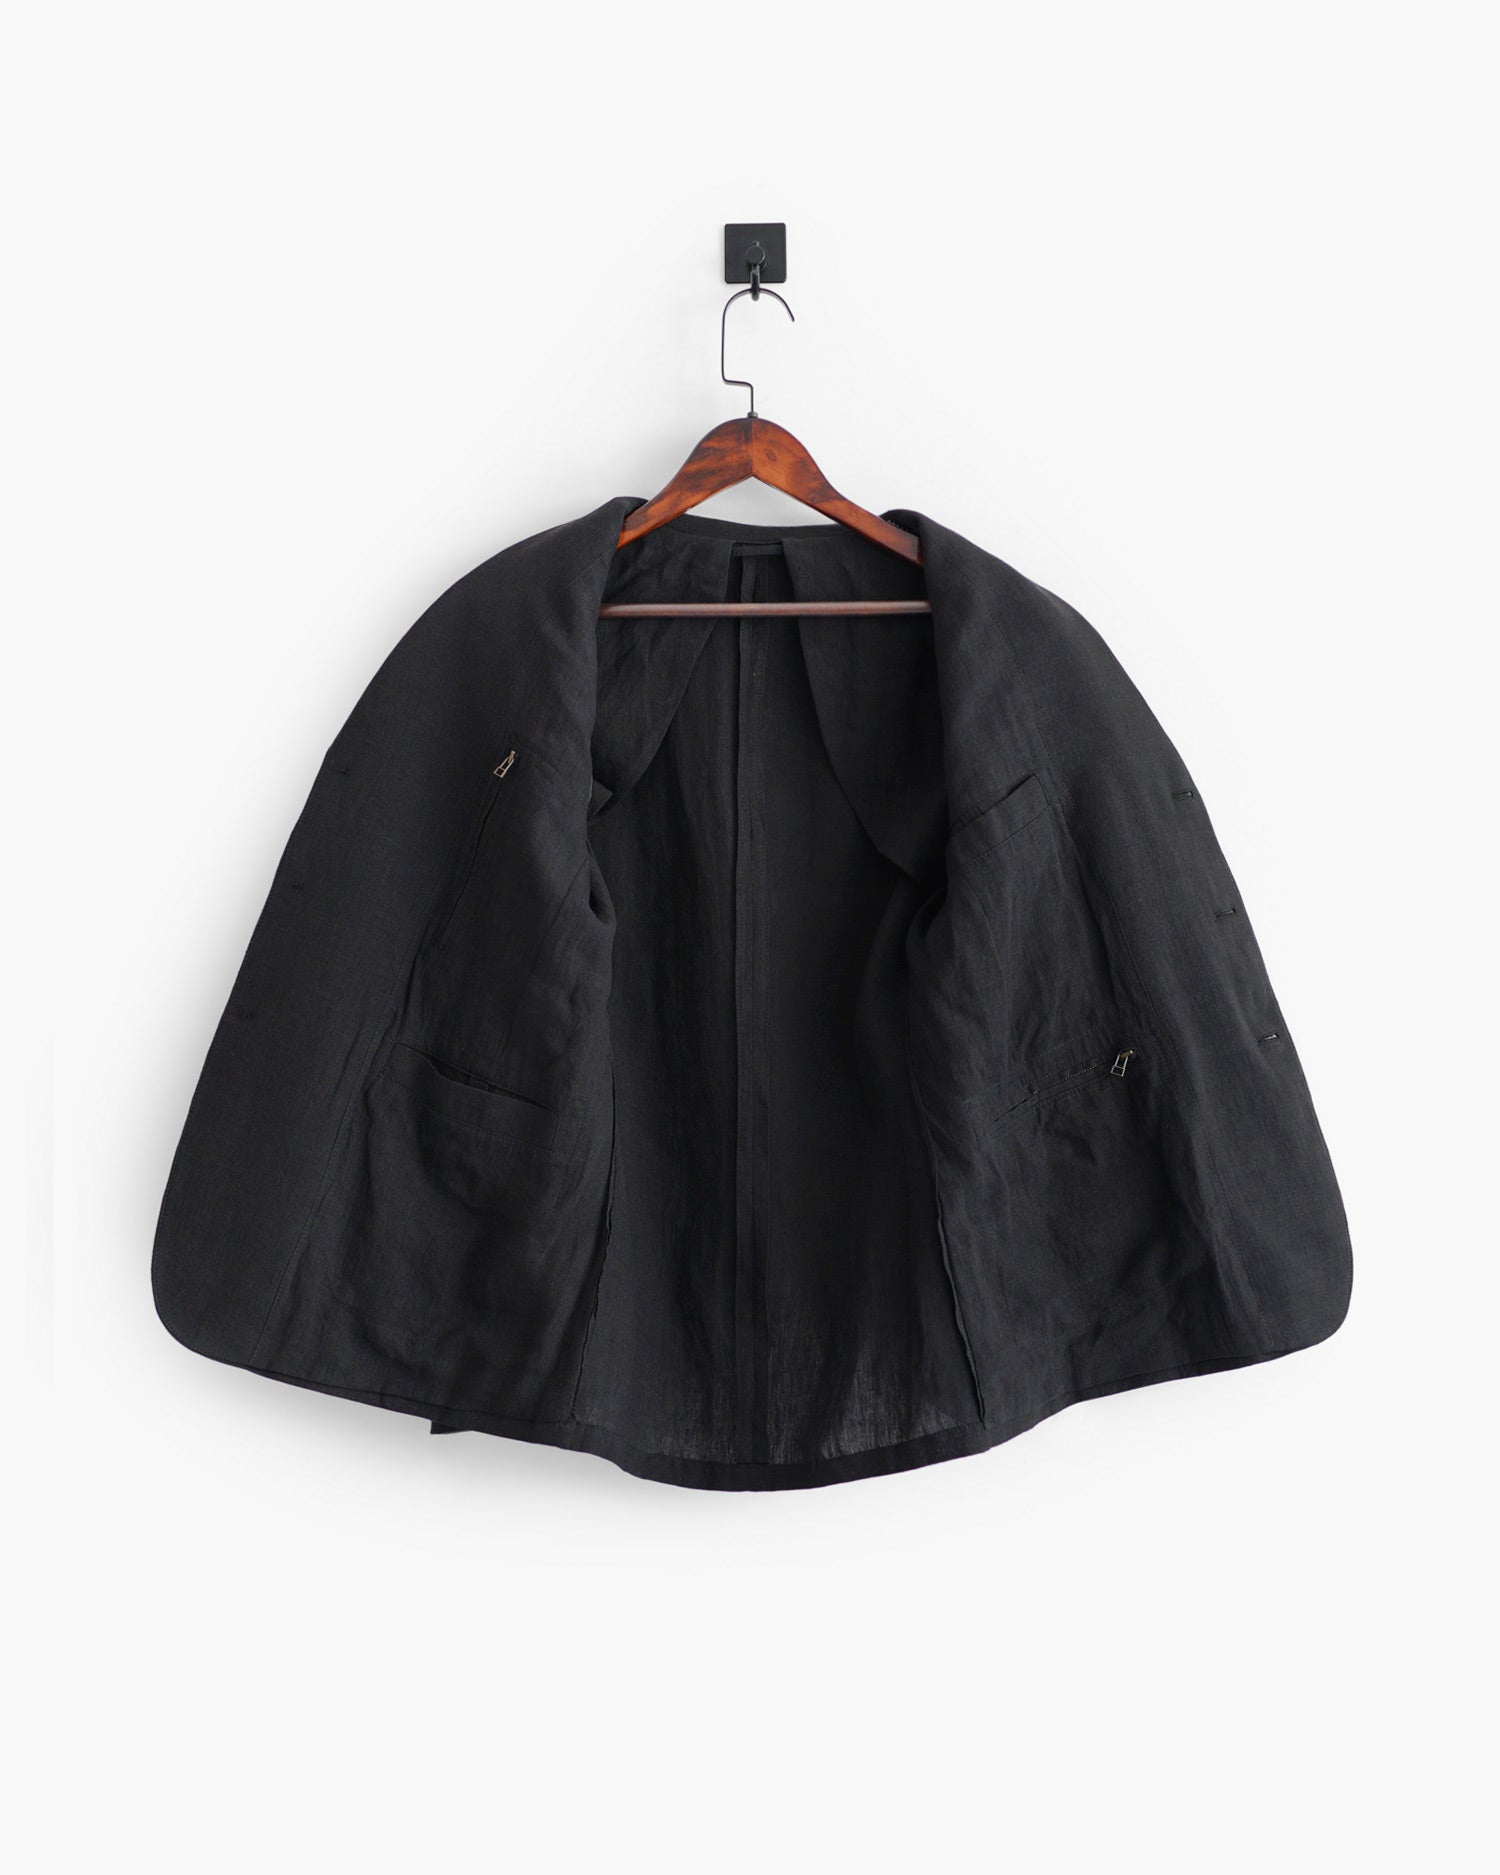 ROSEN-S Daily Suit Jacket - Black Linen